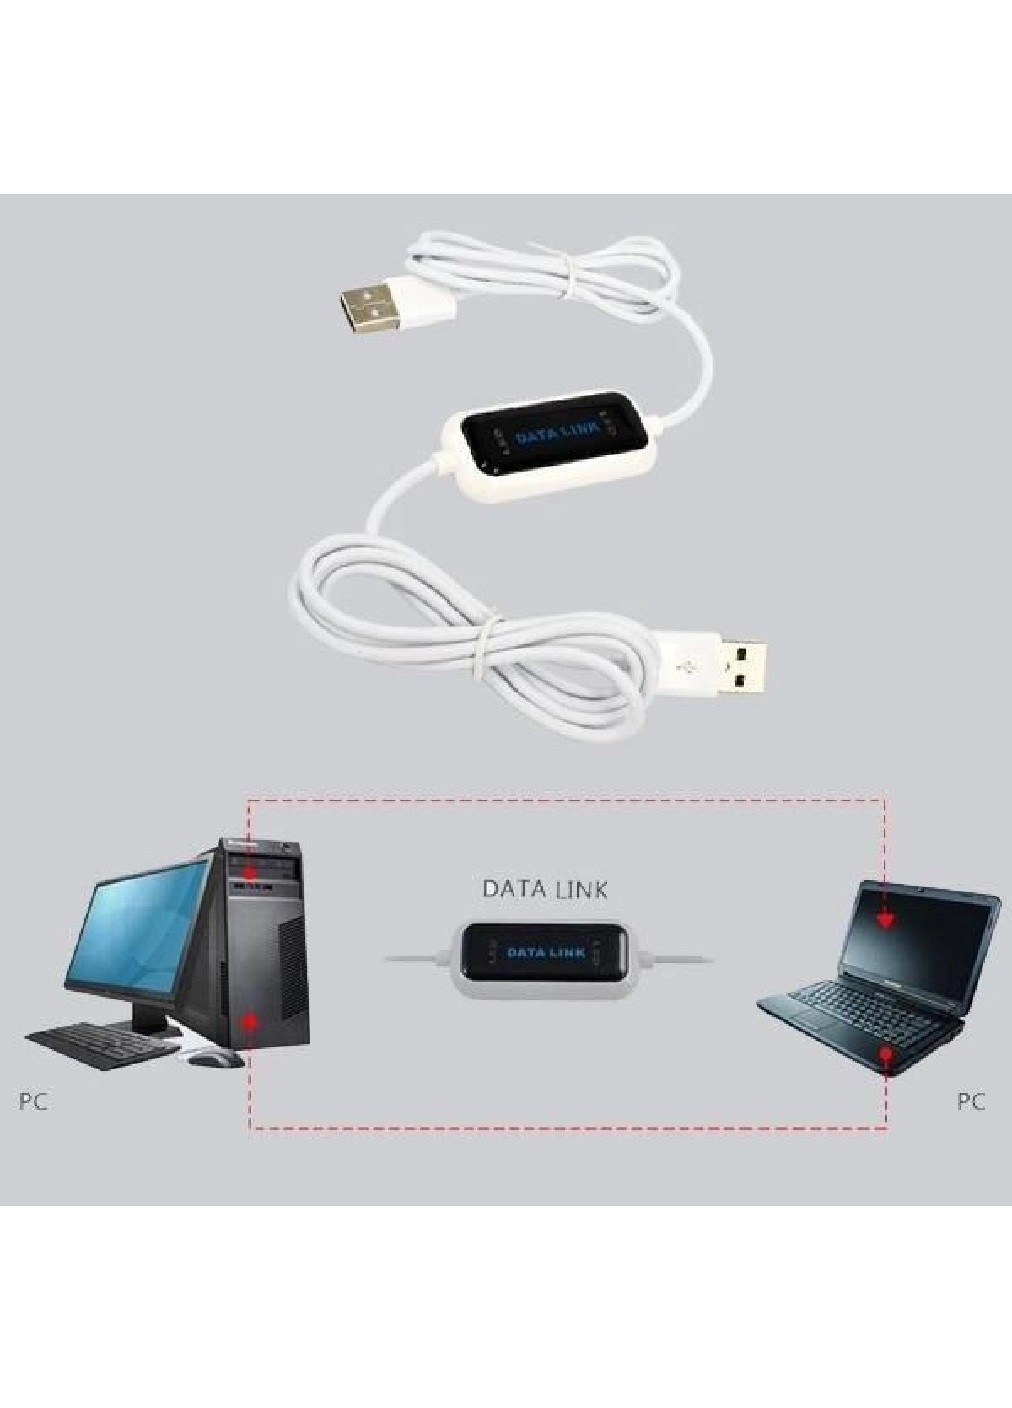 Кабель коннектор DATA LINK для передачи данных между компьютерами по USB 480Mb/s 55 х 27 х 10 мм (474853-Prob) Белый Unbranded (260023485)